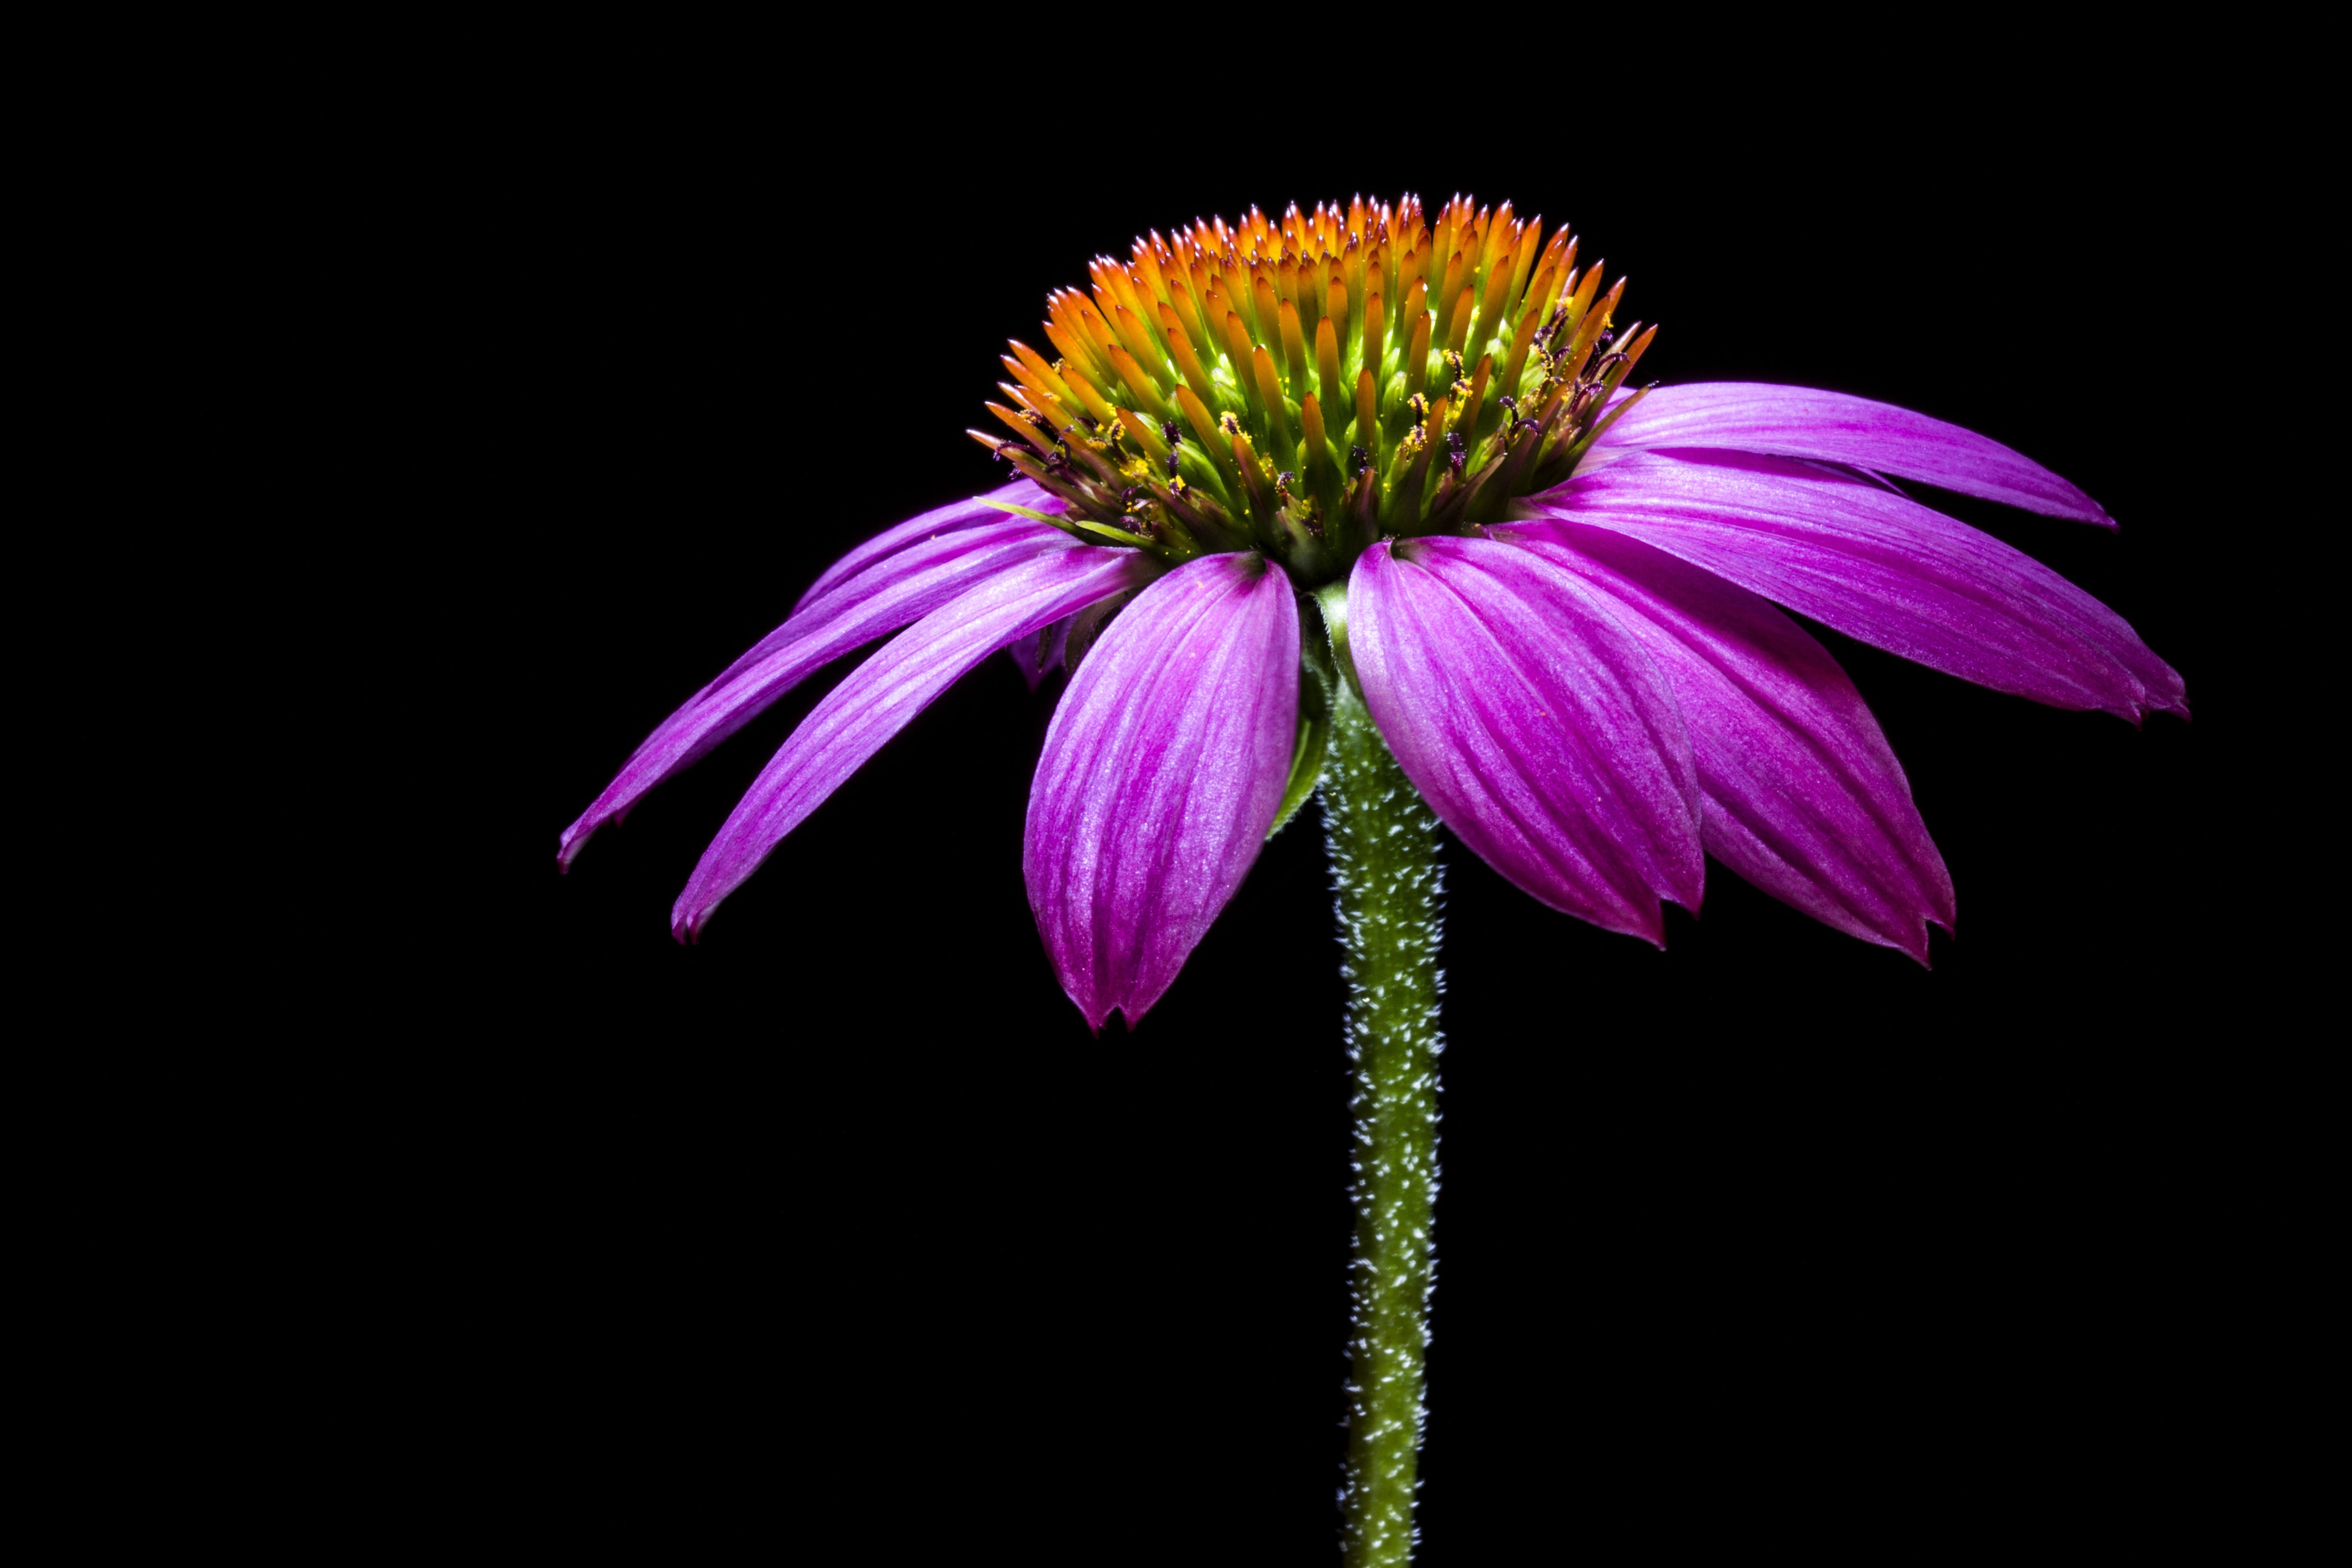 Encanted Echinacea : The Actual Healing Efficacy - Magic Hour